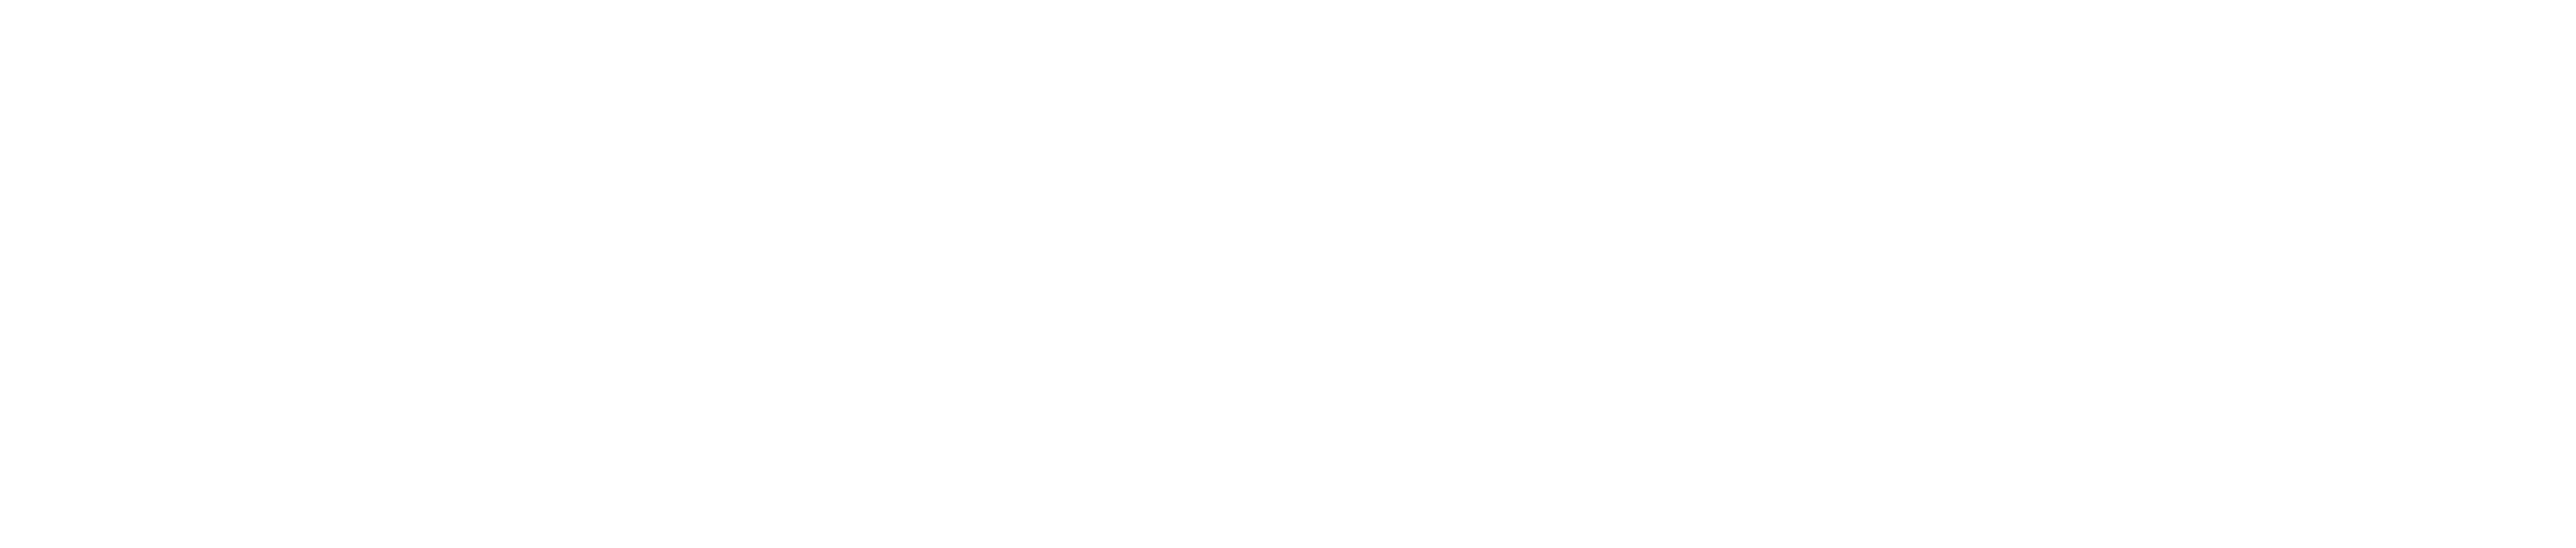 Henry F. McCabe Family School of Education